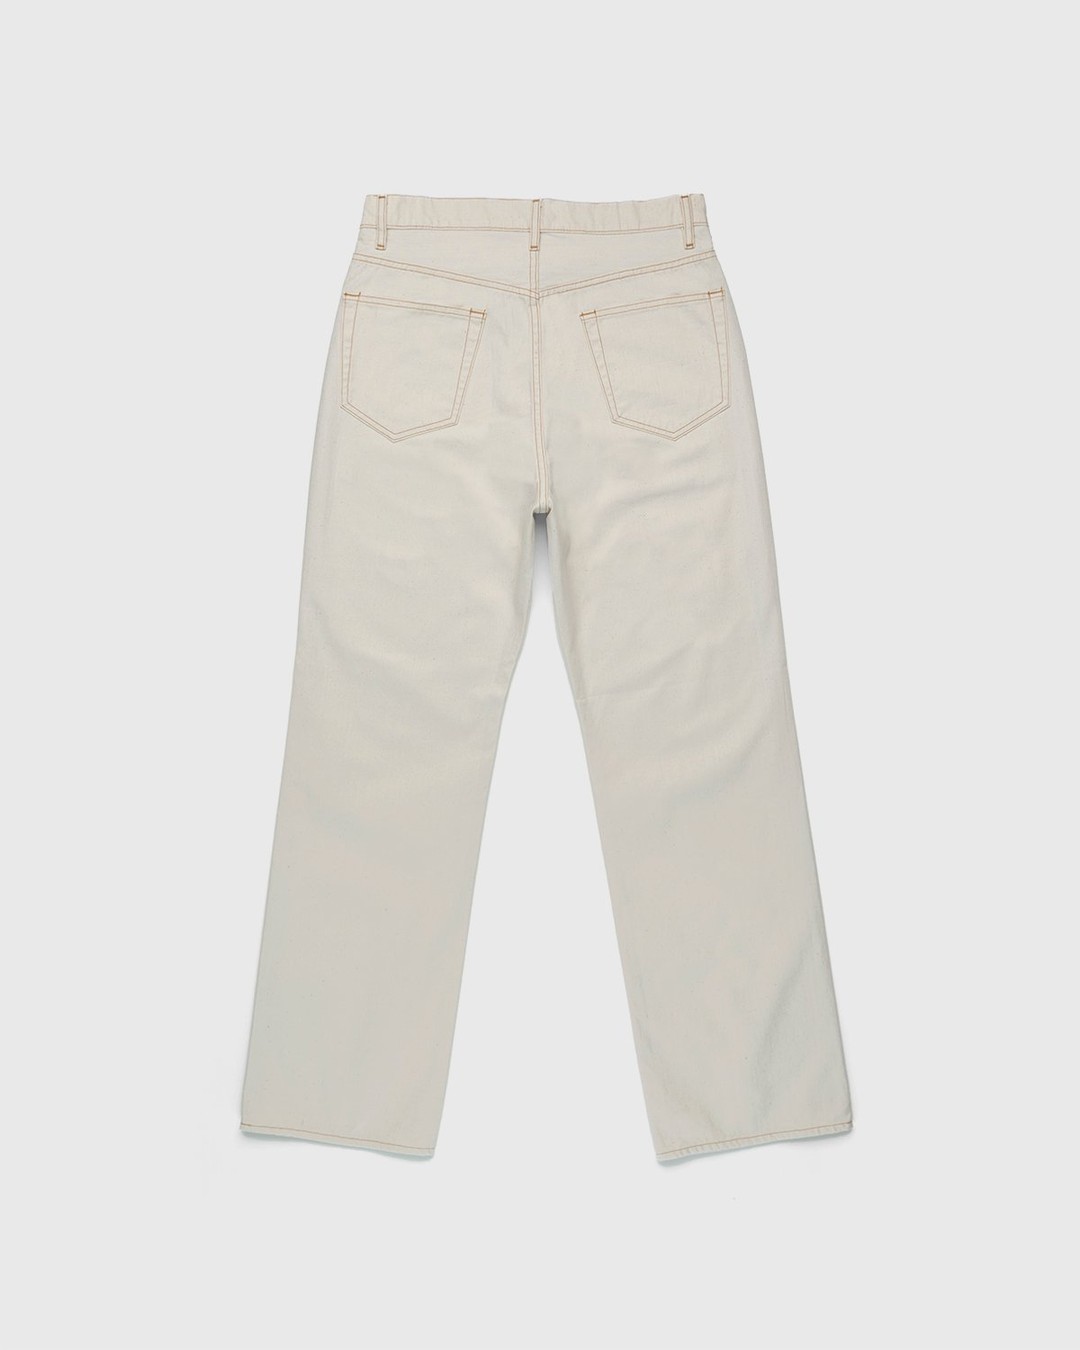 Auralee – Organic Undyed Cotton Pants Natural - Pants - Beige - Image 2